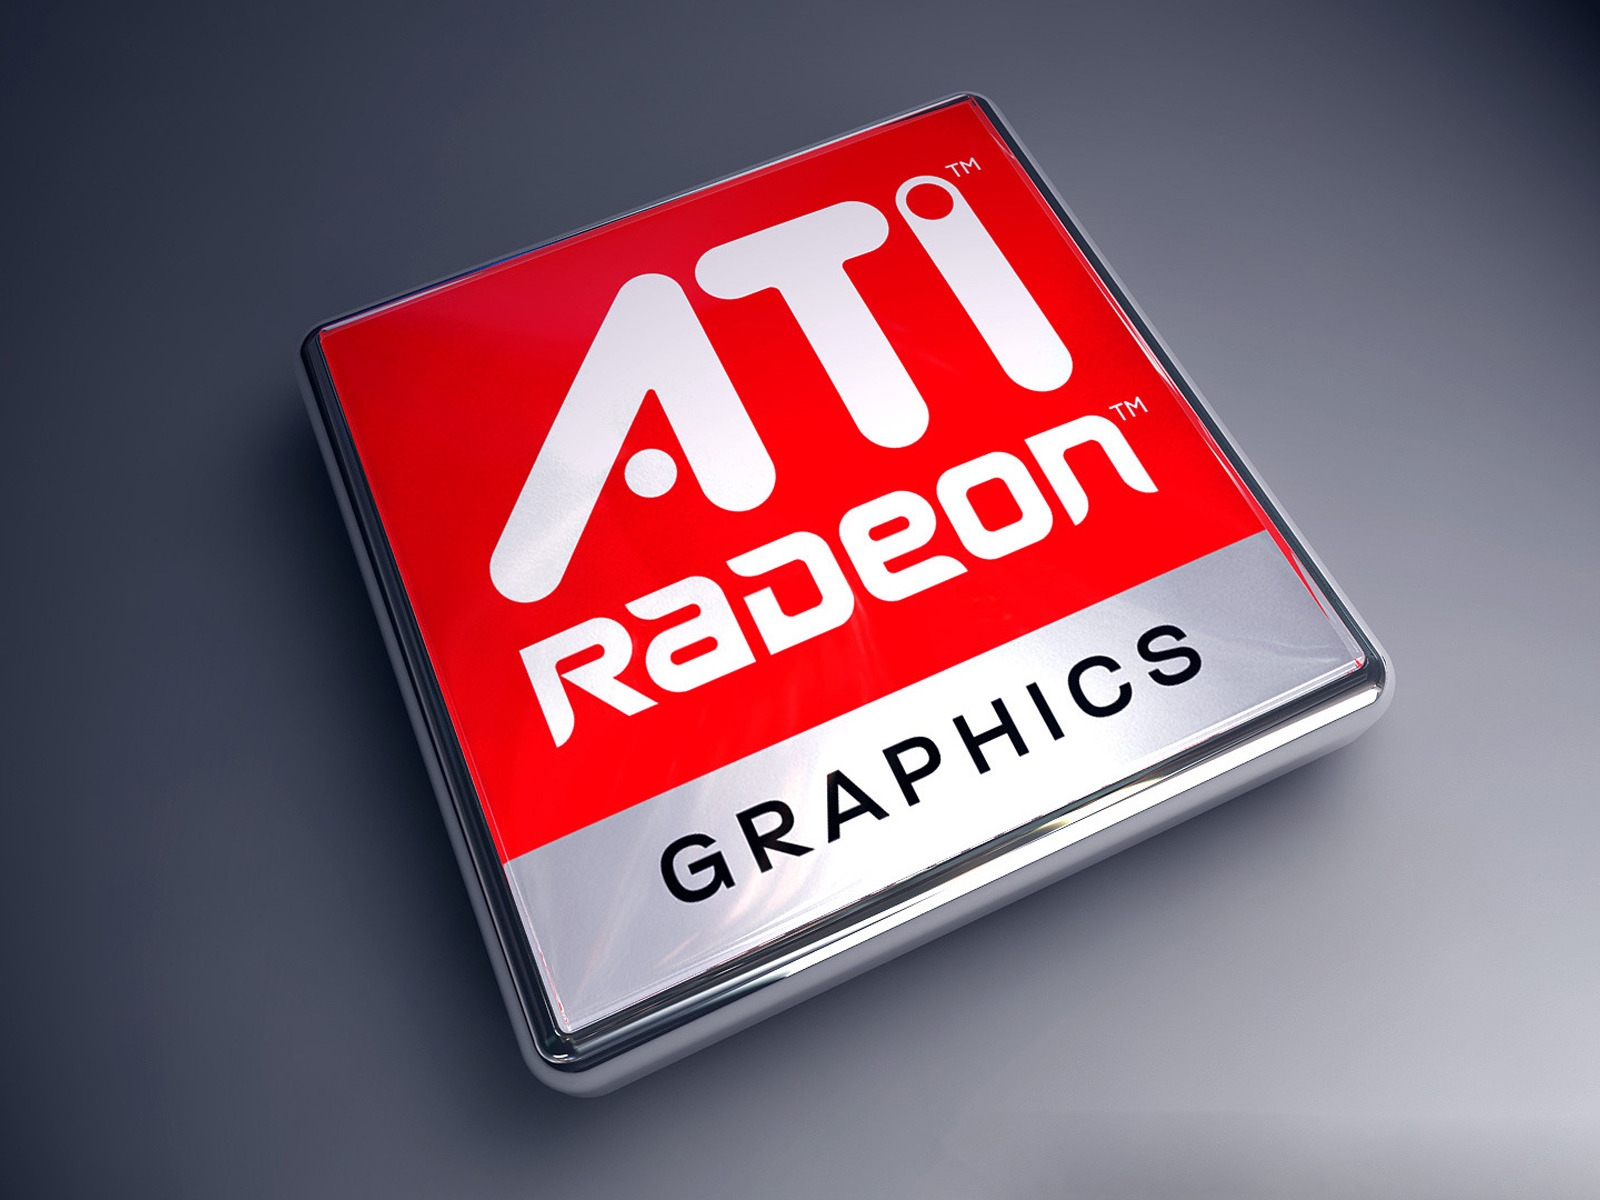 ATI Radeon Graphics for 1600 x 1200 resolution